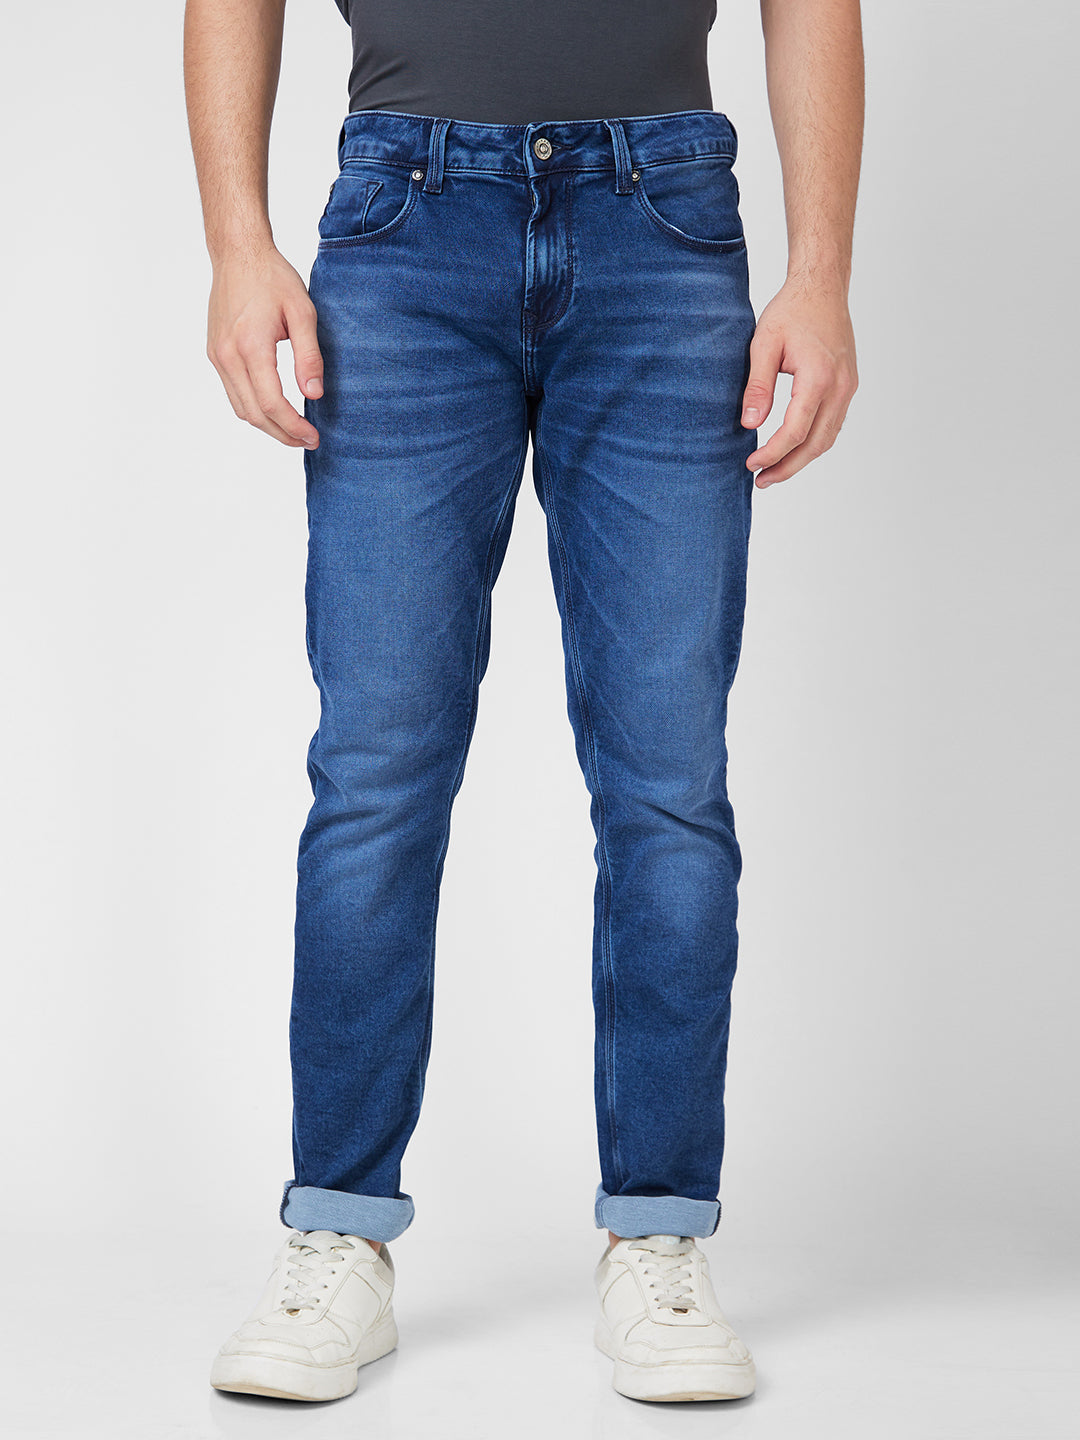 Spykar Low Rise Slim Fit Narrow Length Blue Jeans For Men